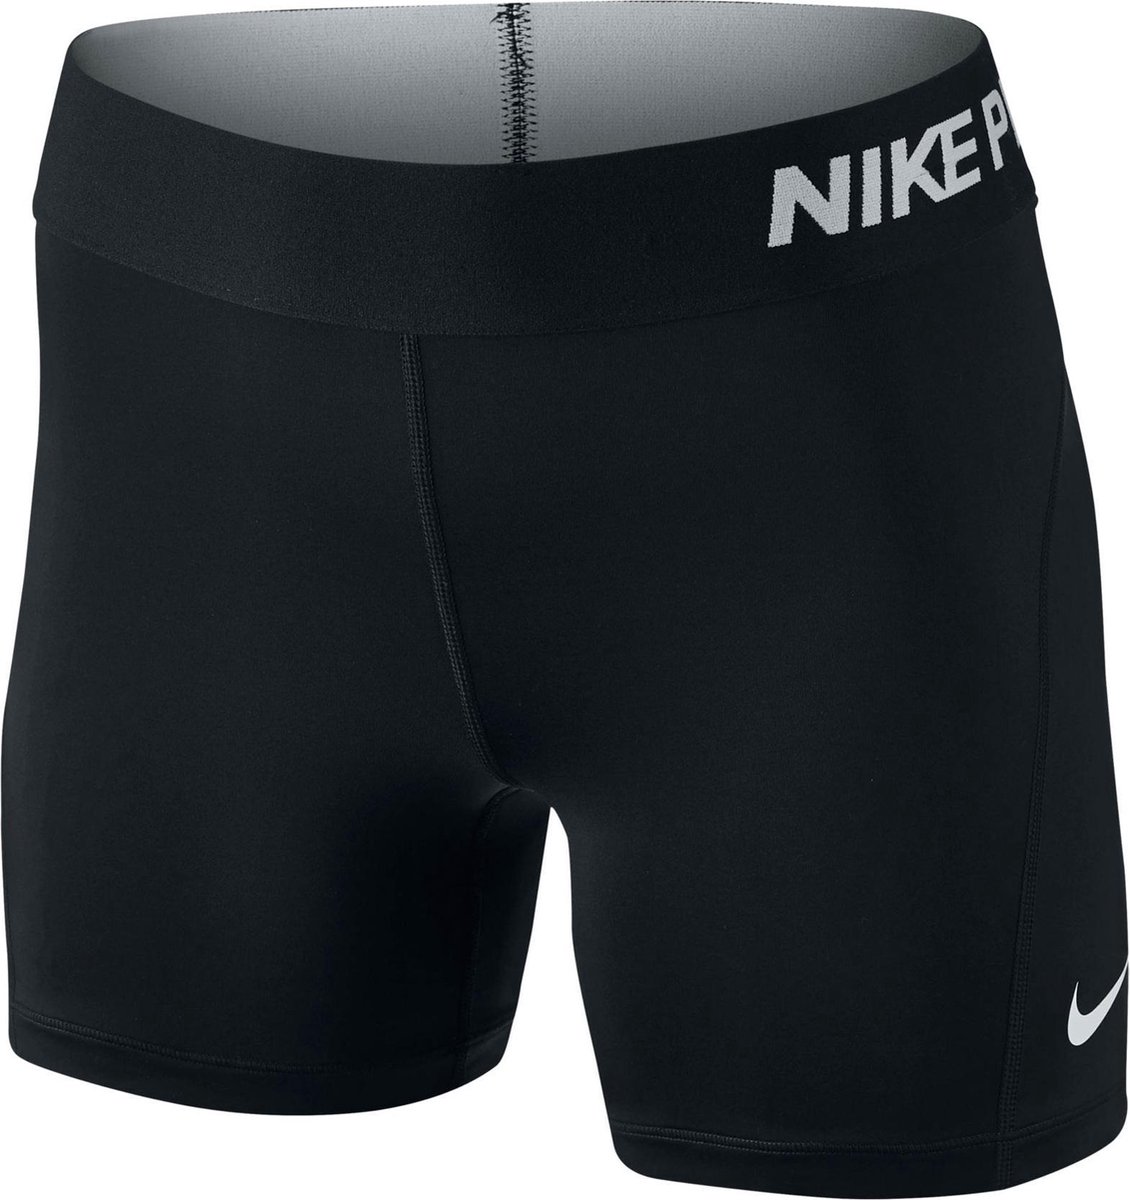 Nike Pro Short Dames Hardloopbroek - Maat L - Vrouwen - zwart/wit | bol